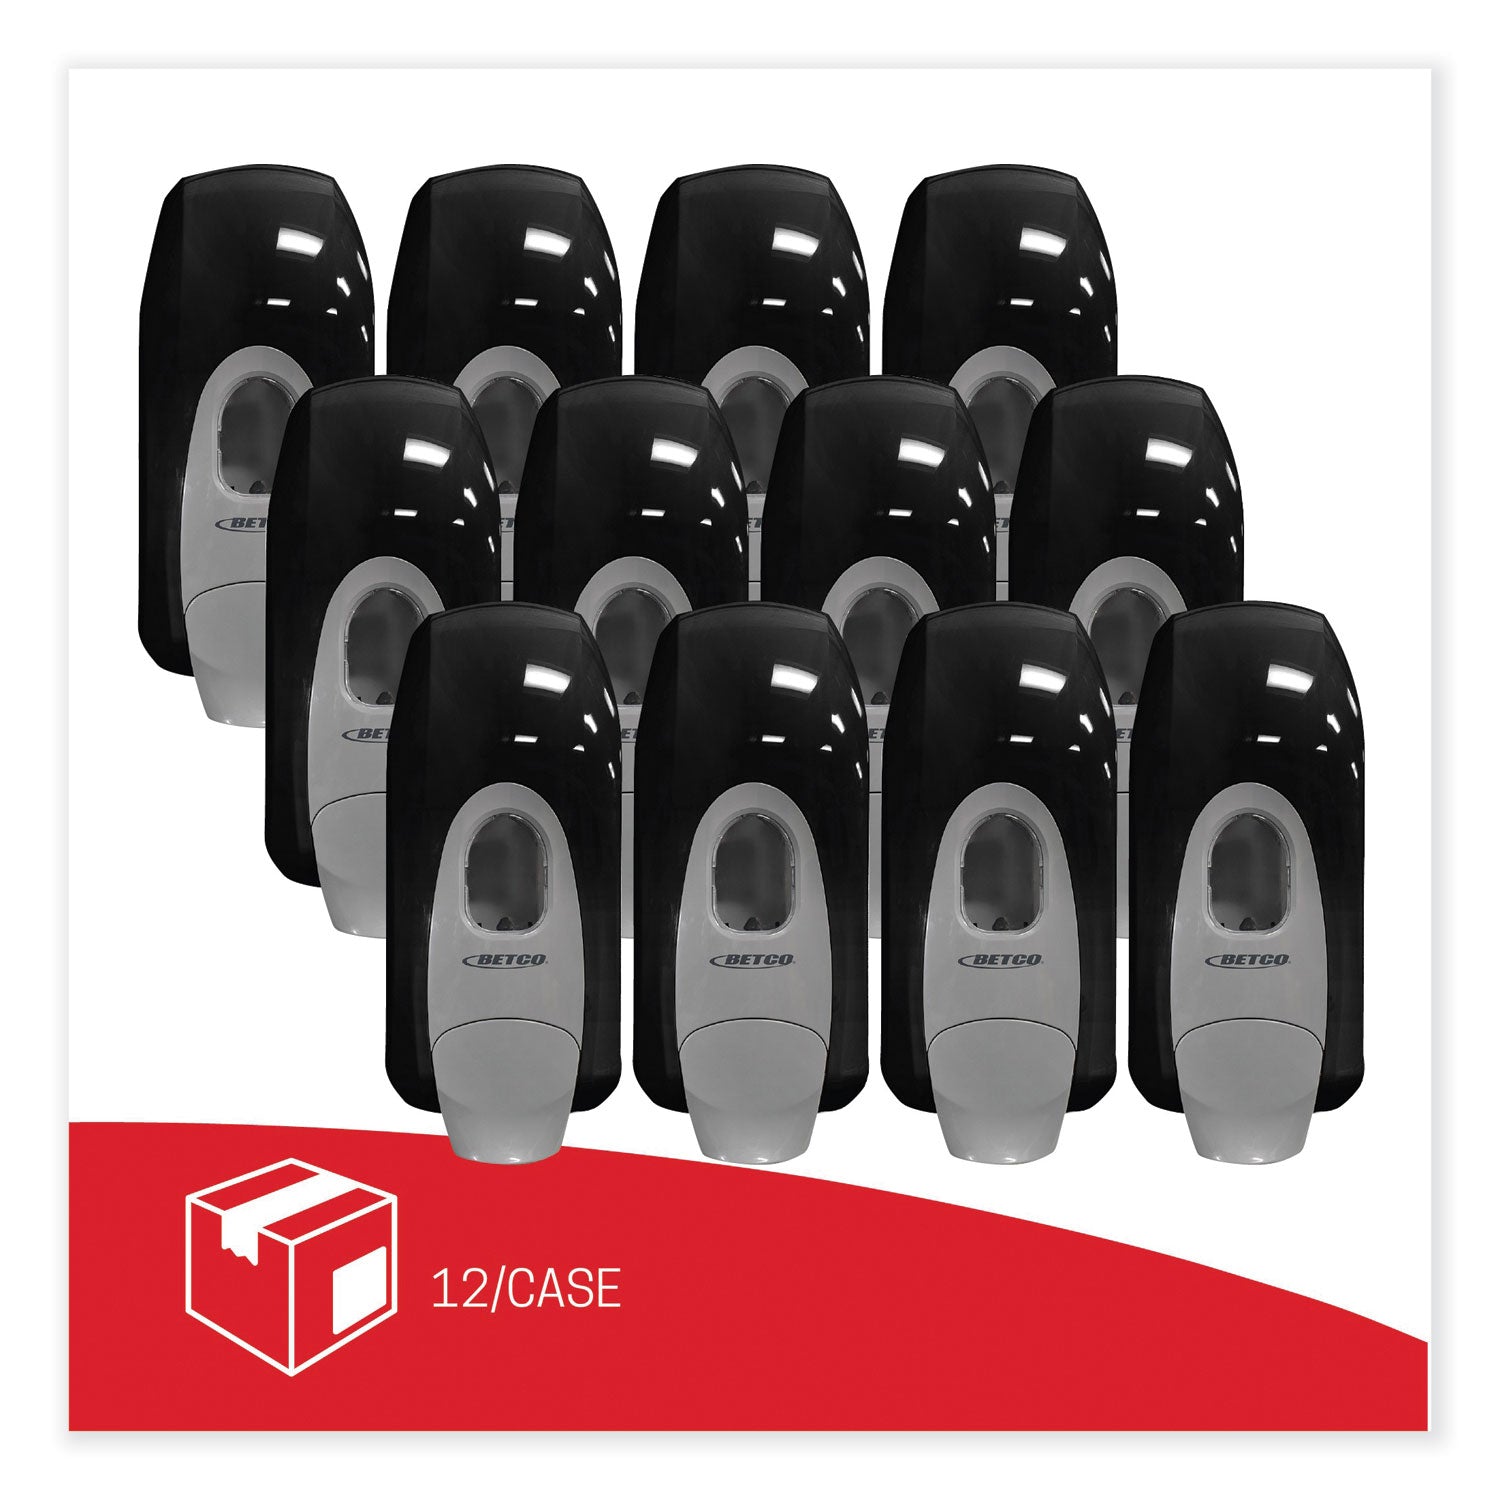 Clario Dispensing System Manual Foam Dispenser, 1,000 mL, 5.11 x 3.85 x 11.73, Black, 12/Carton - 4